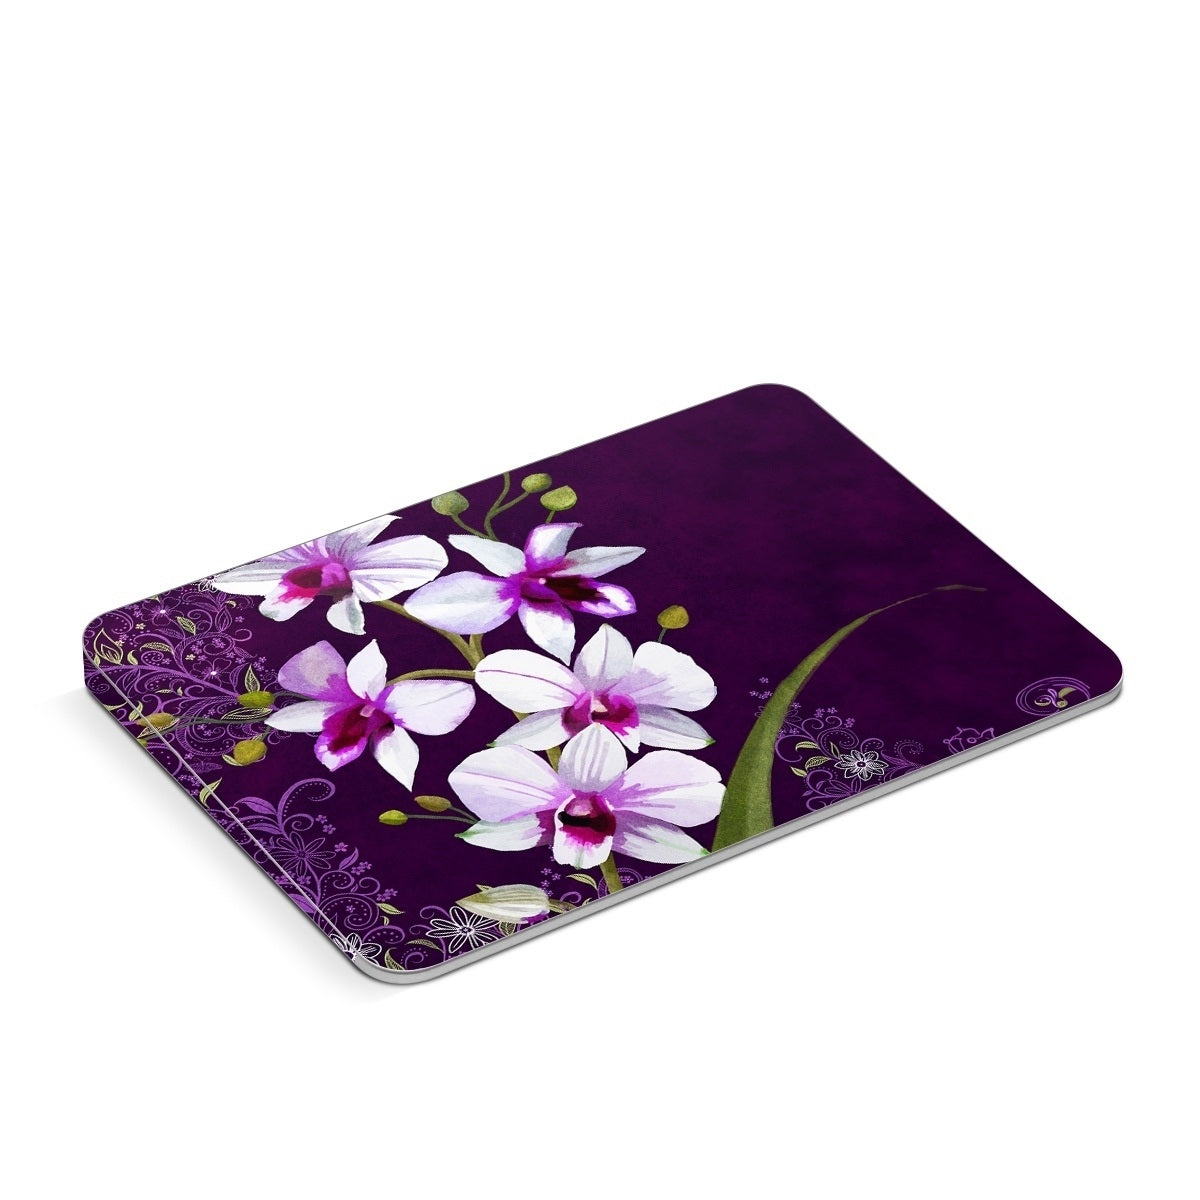 Violet Worlds - Apple Magic Trackpad Skin